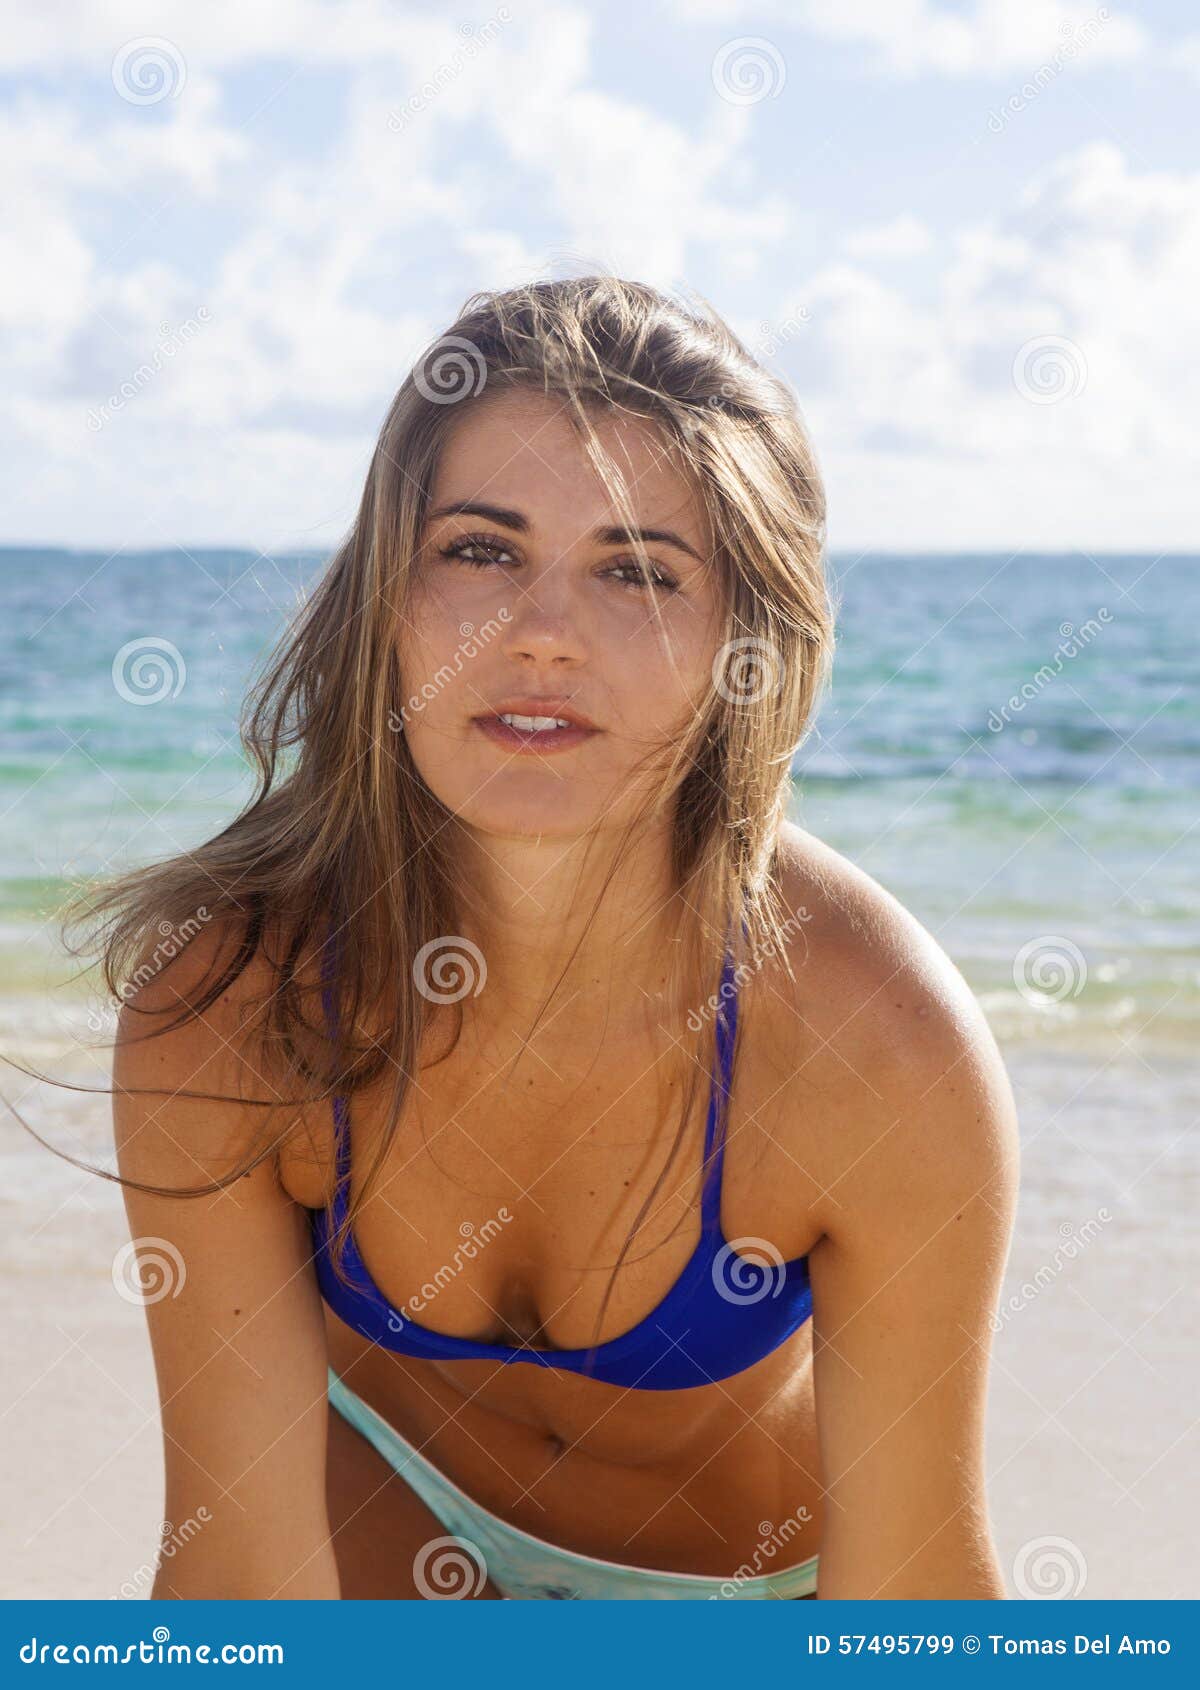 Beach nudist teen